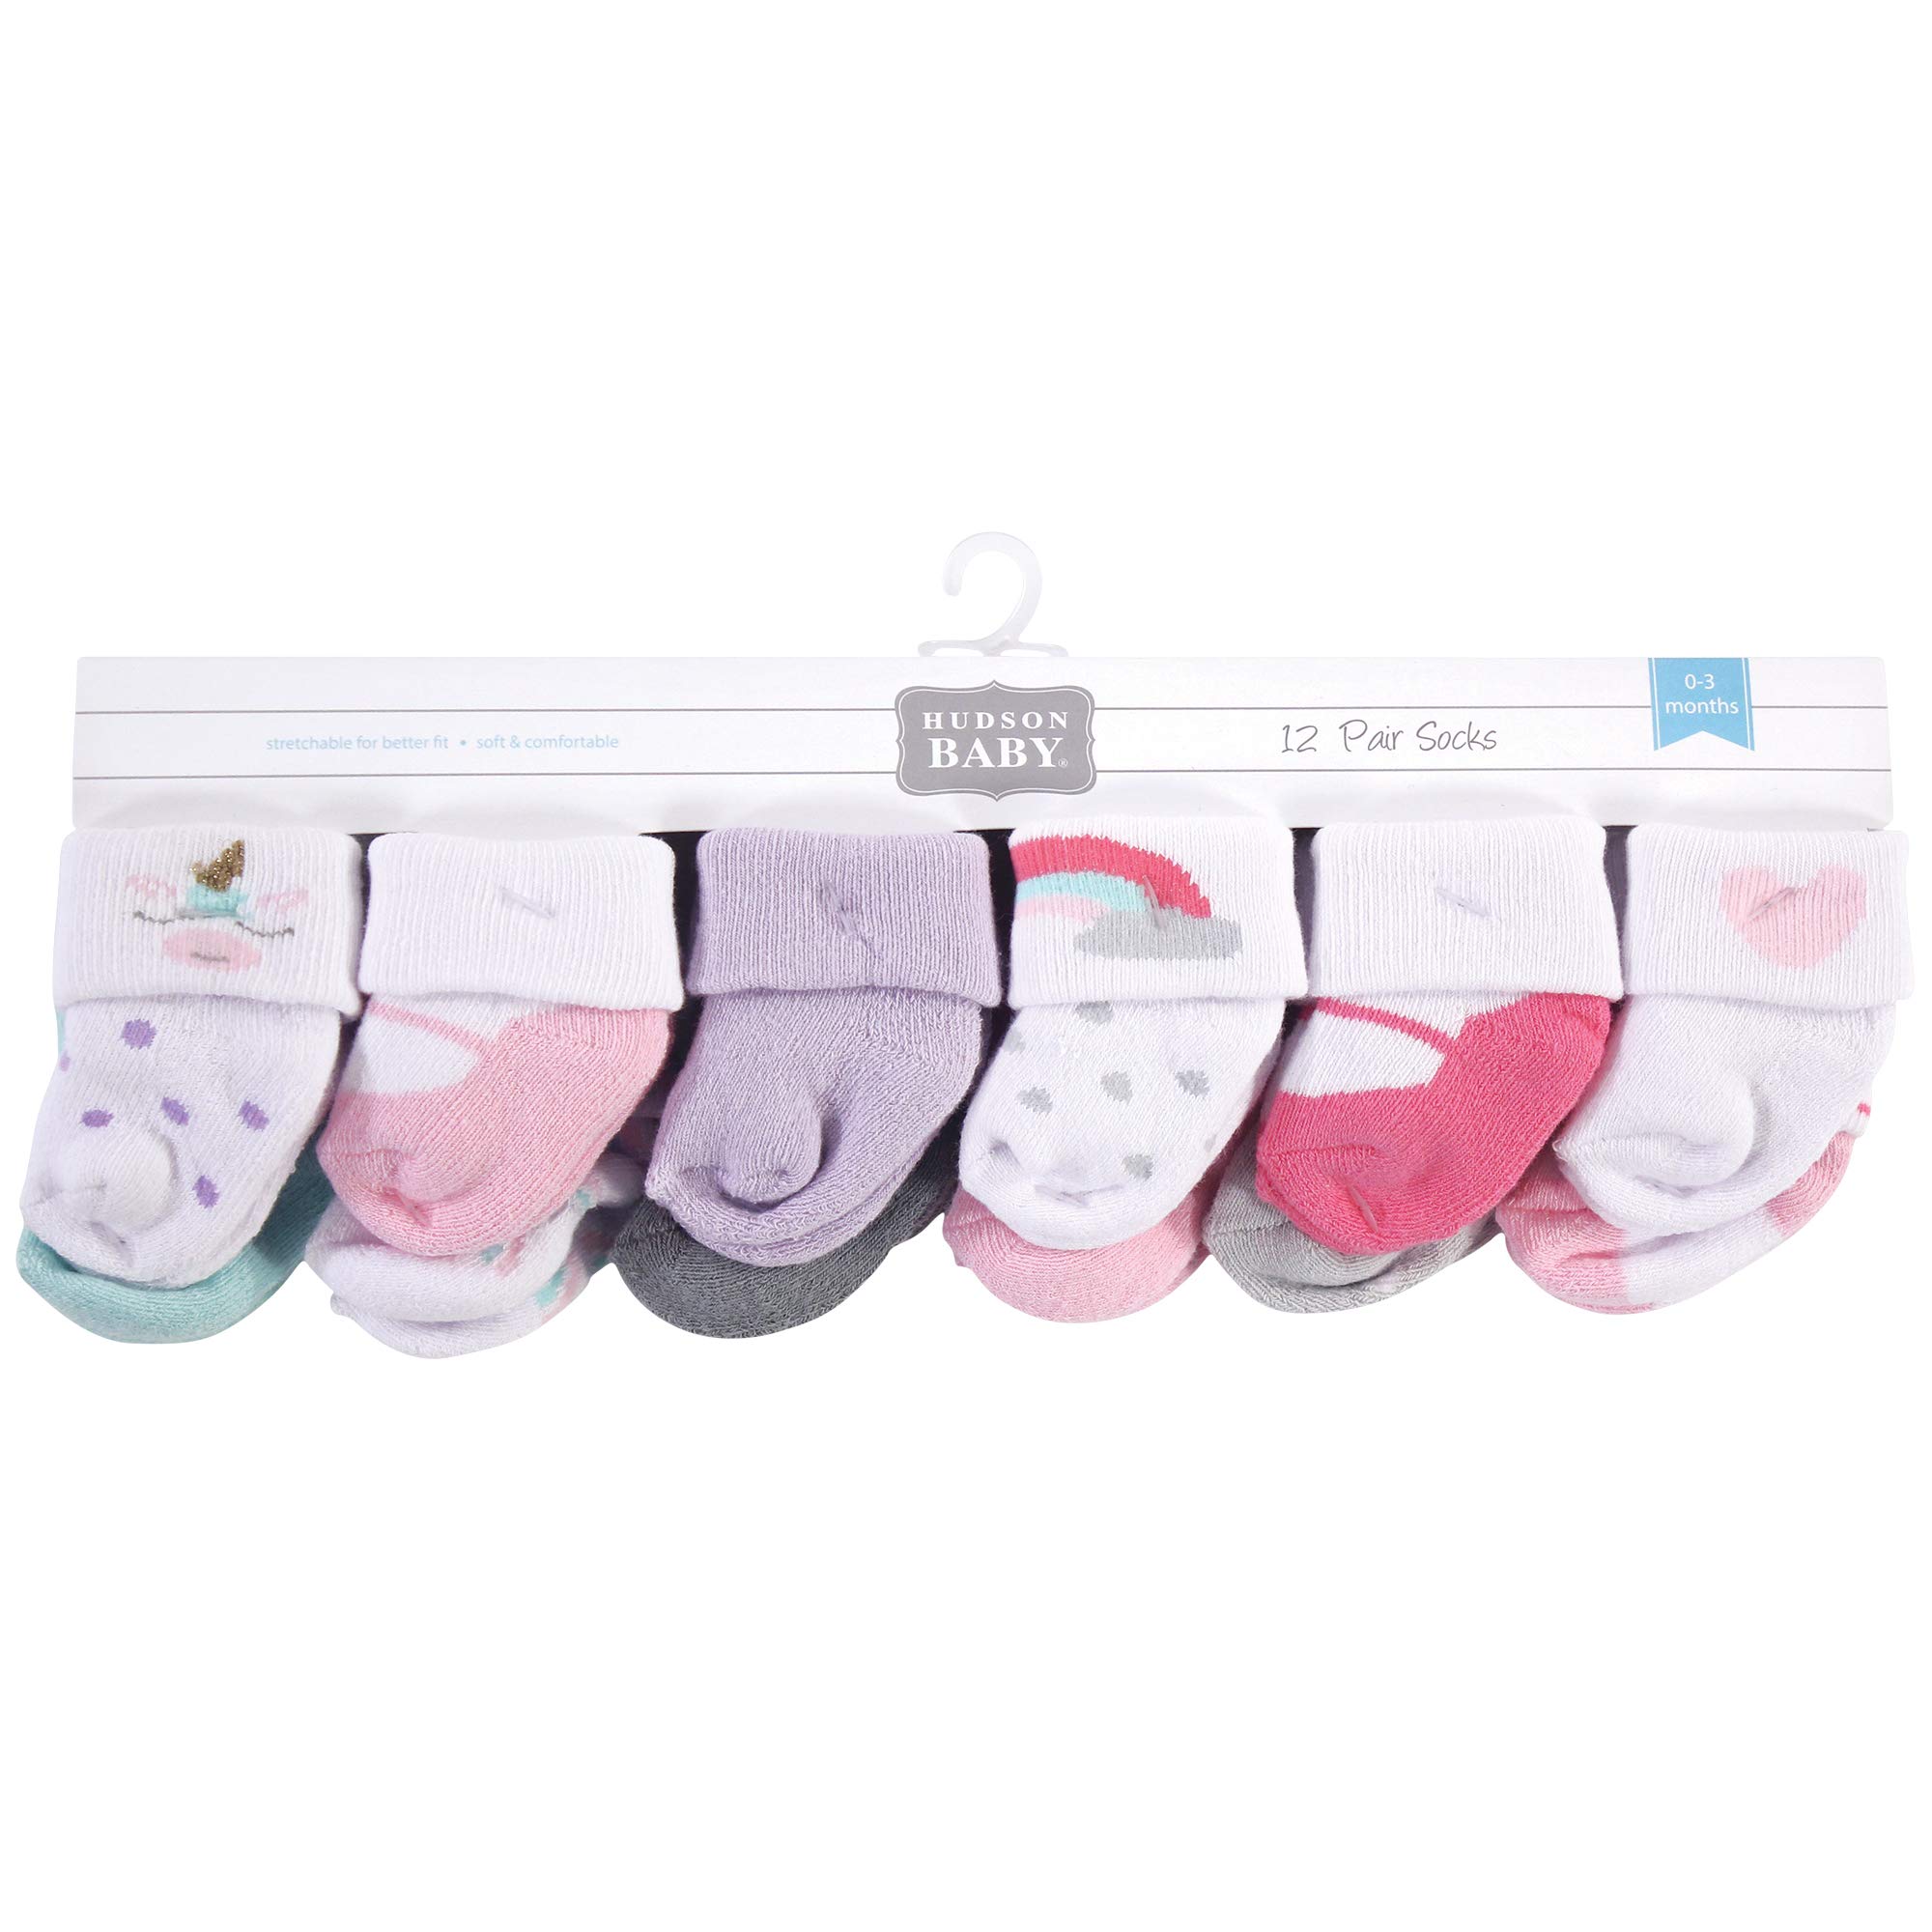 Hudson Baby Unisex Baby Cotton Rich Newborn and Terry Socks Unicorn, 0-3 Months